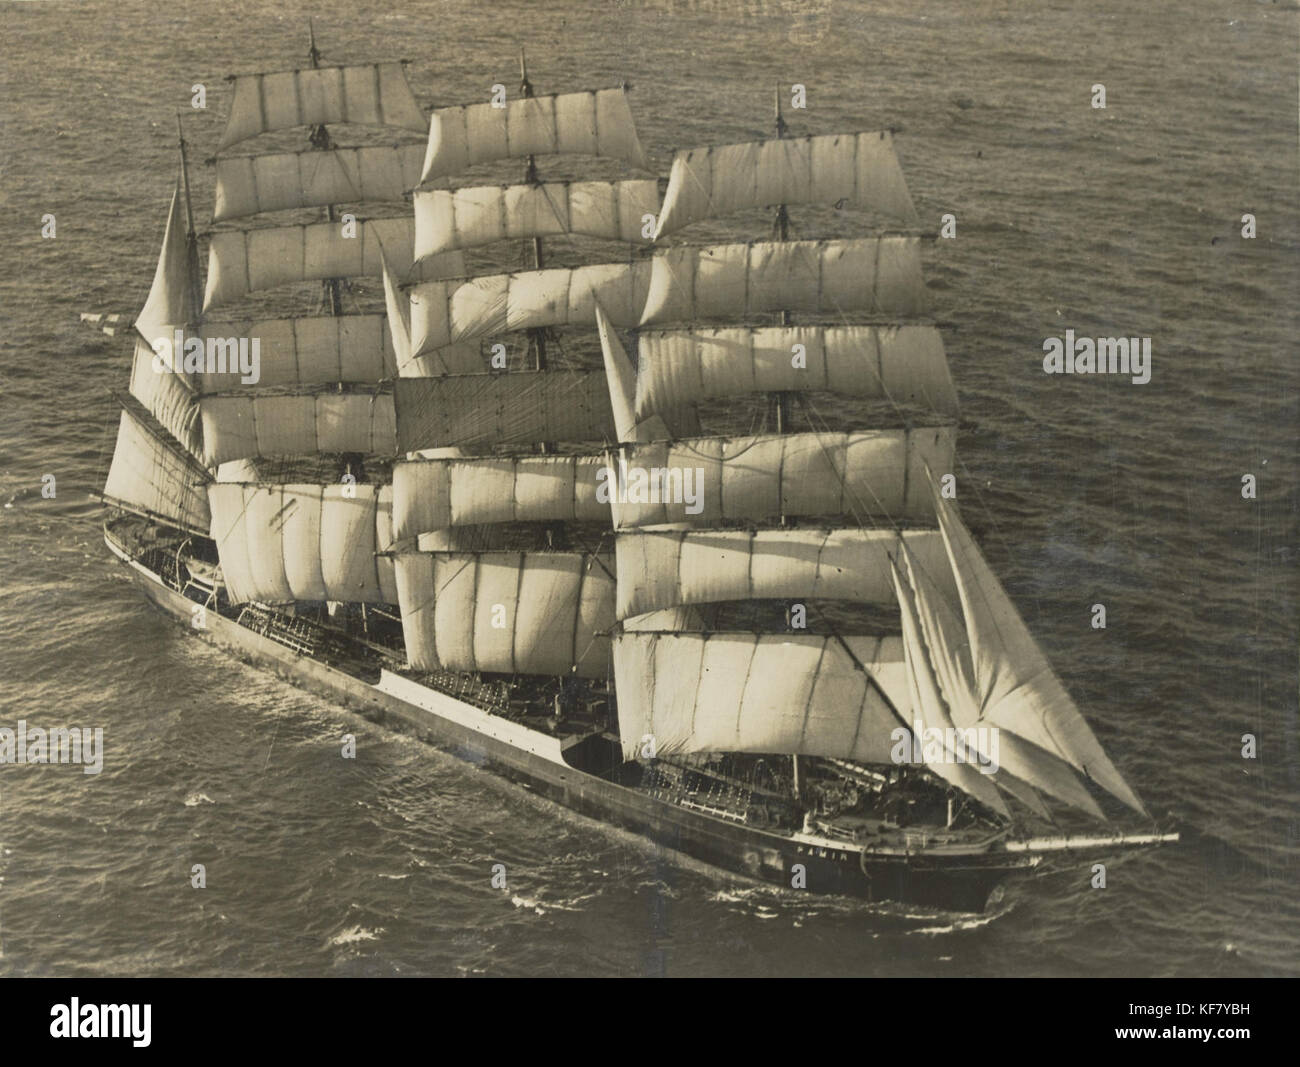 Pamir (ship, 1905)   SLV H99.220 4466 Stock Photo